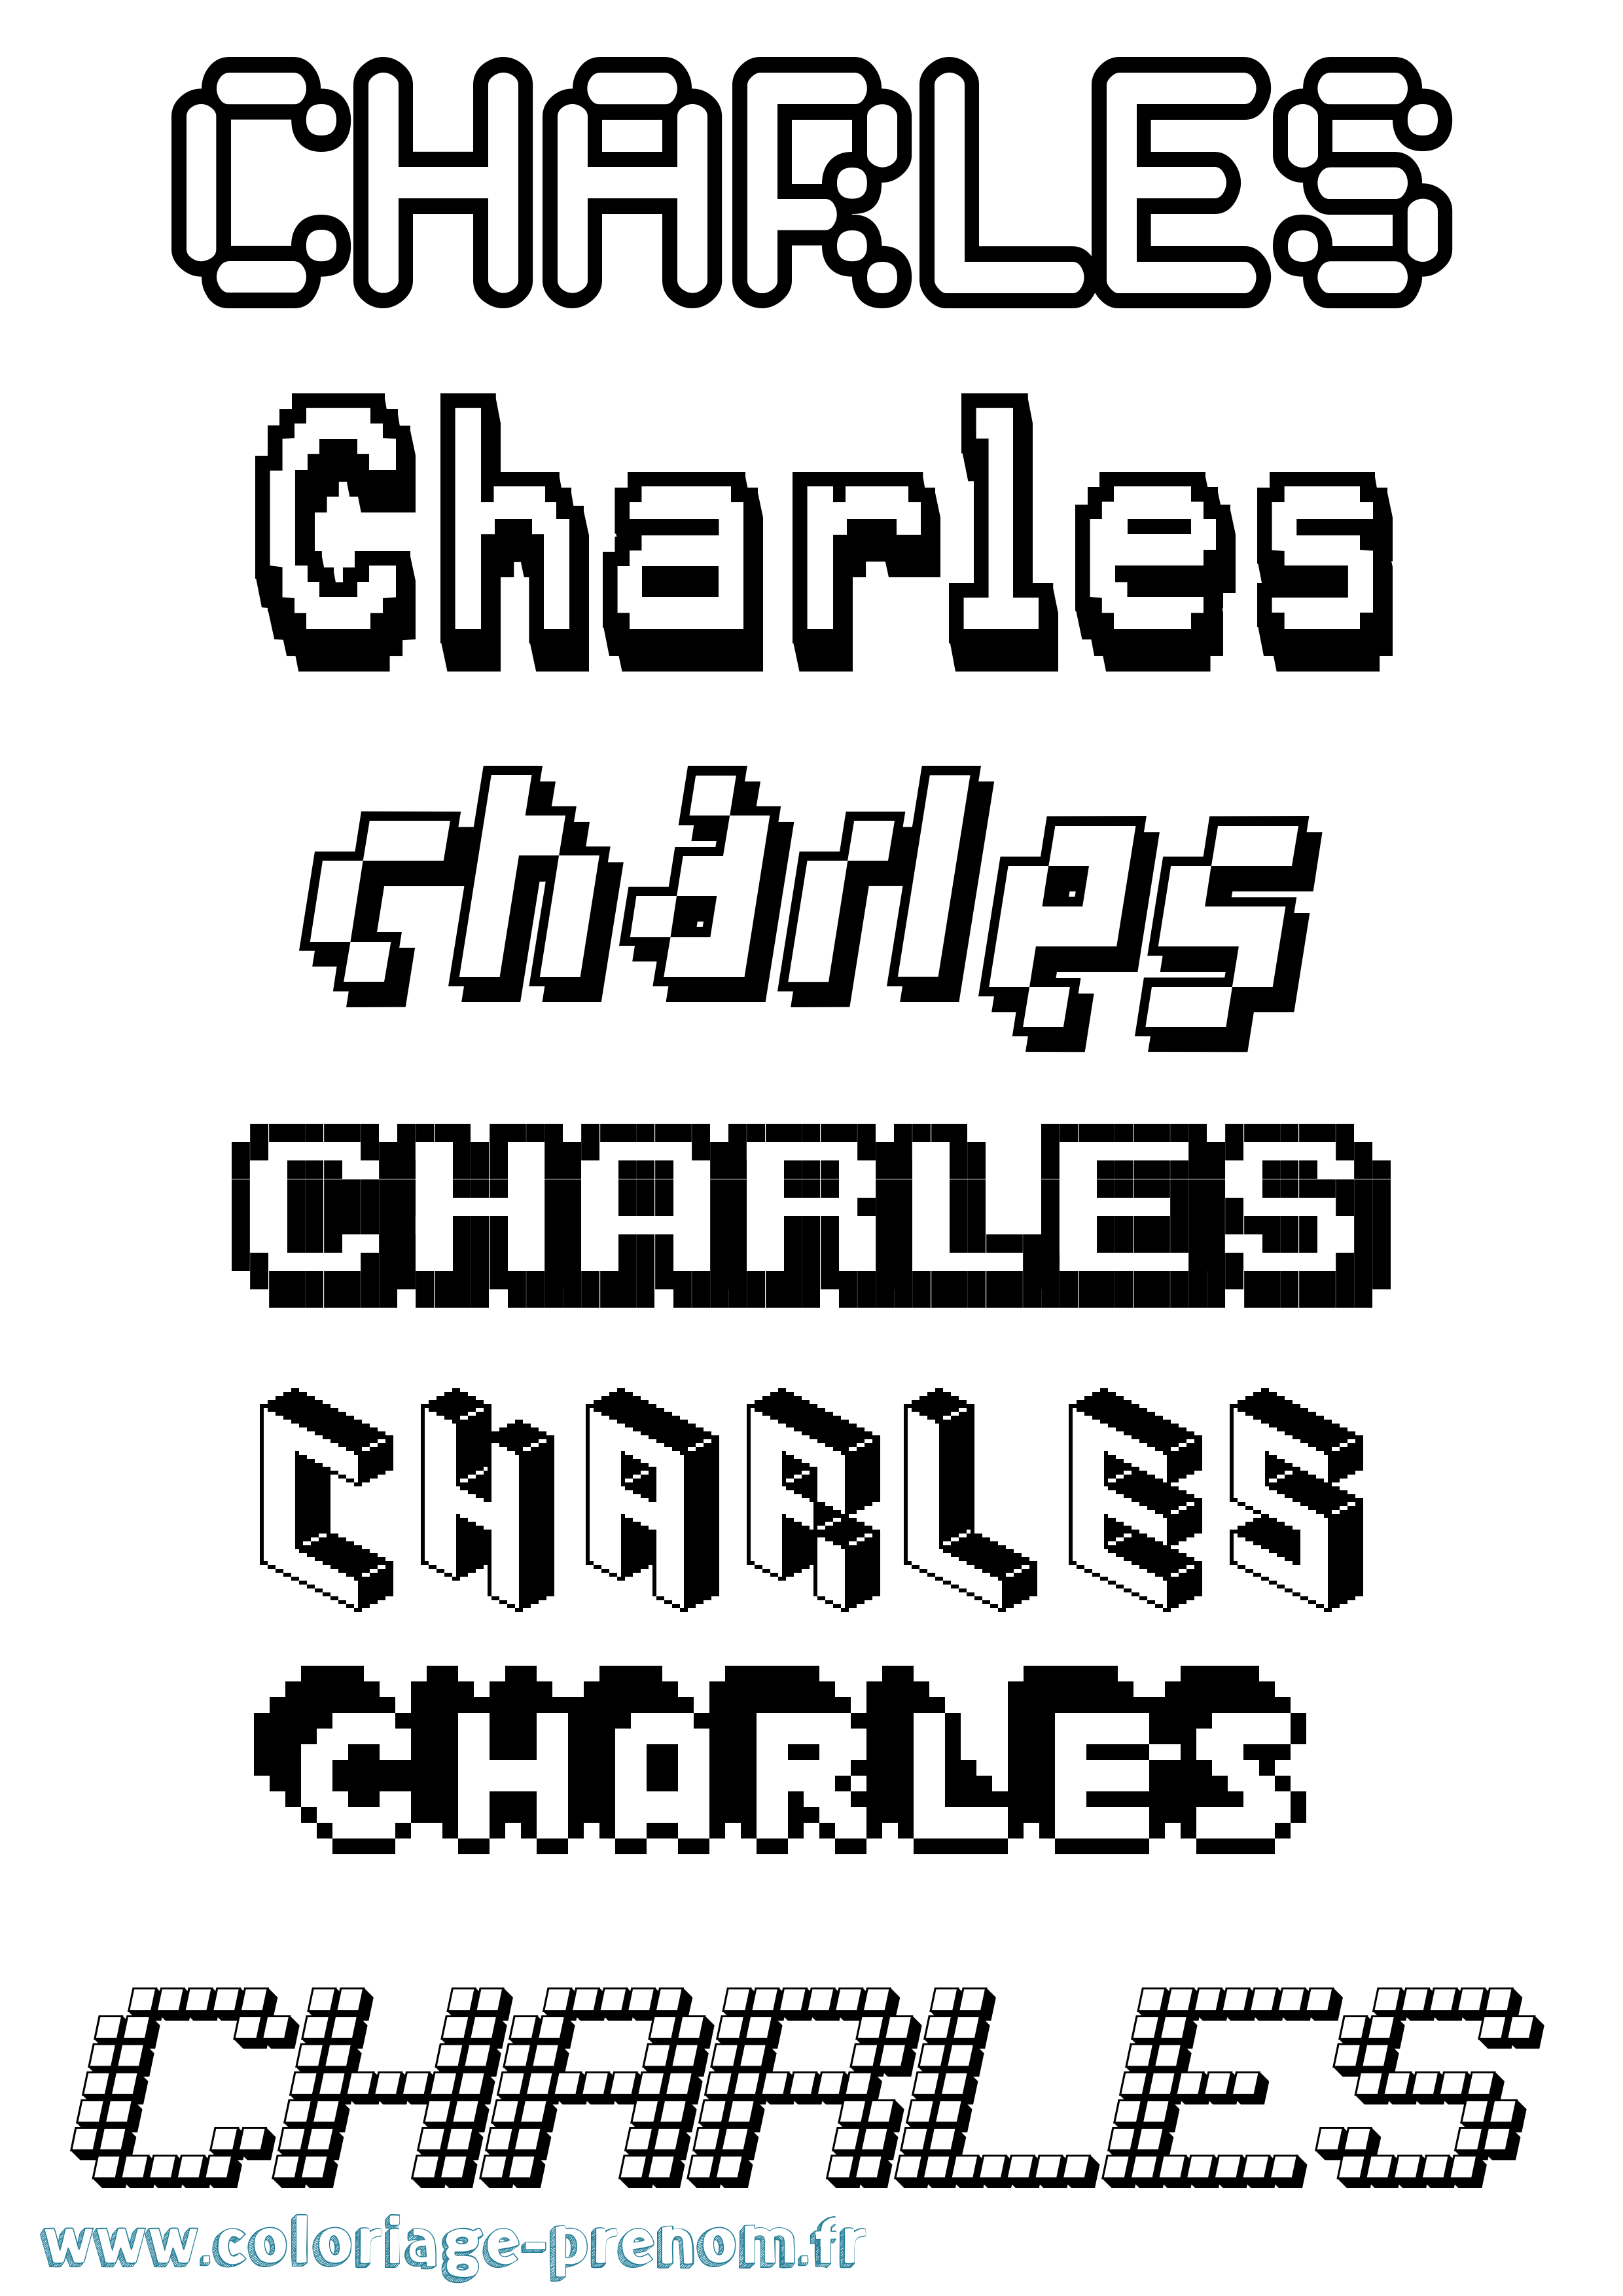 Coloriage prénom Charles Pixel